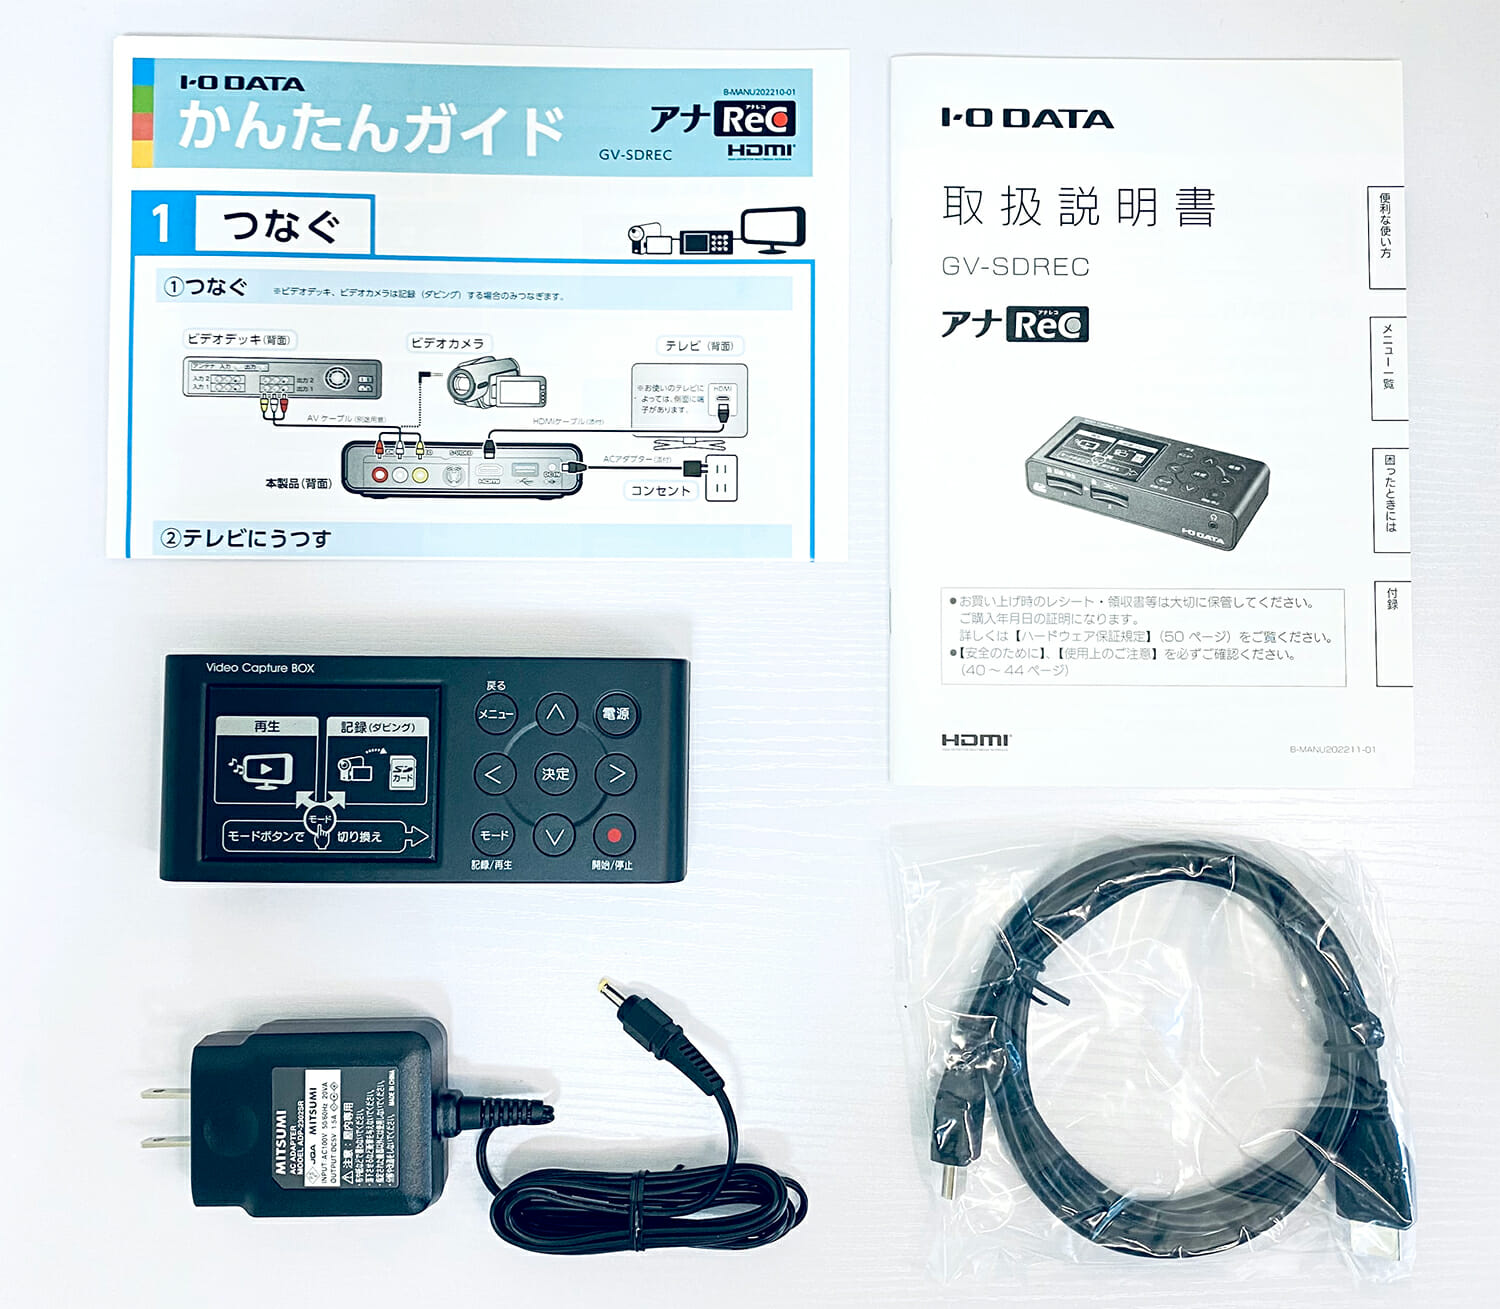 I-O DATA ビデオ/VHS 8mm ダビング SDカード/HDD保存 パソコン不要 ビデオキャプチャー 「アナレコ」GV-SDREC 